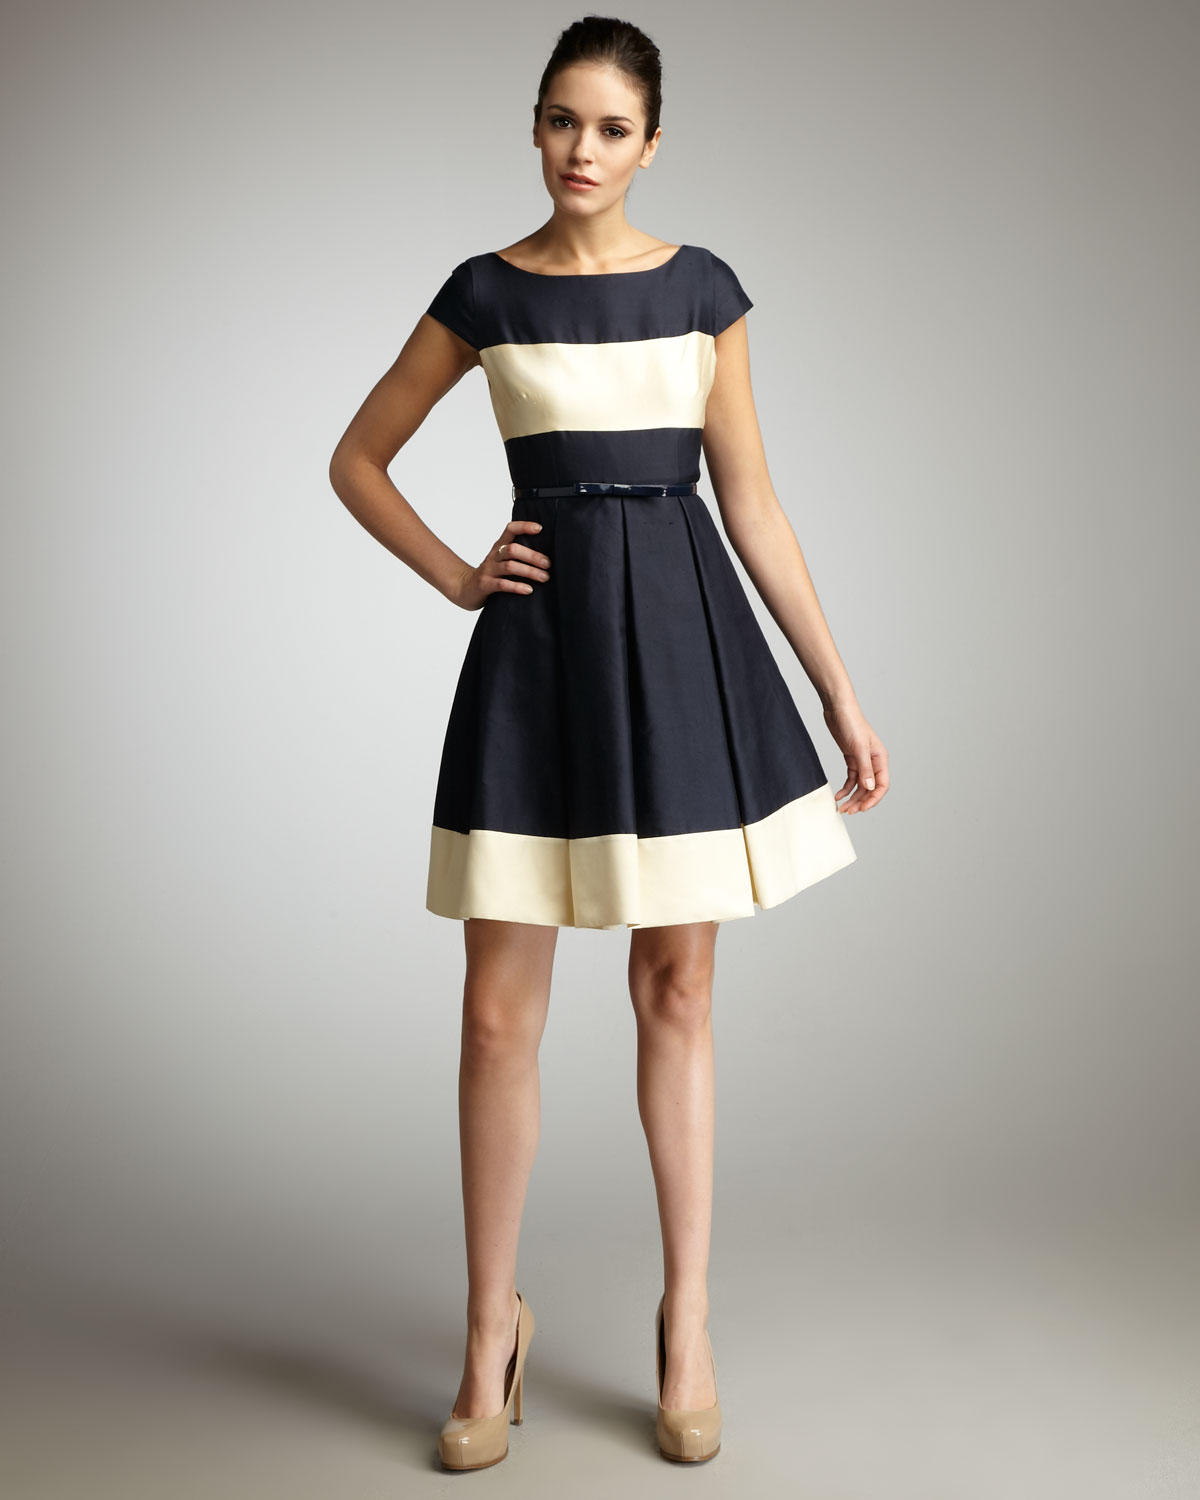 Lyst - Kate Spade New York Addete Colorblock Dress in Blue